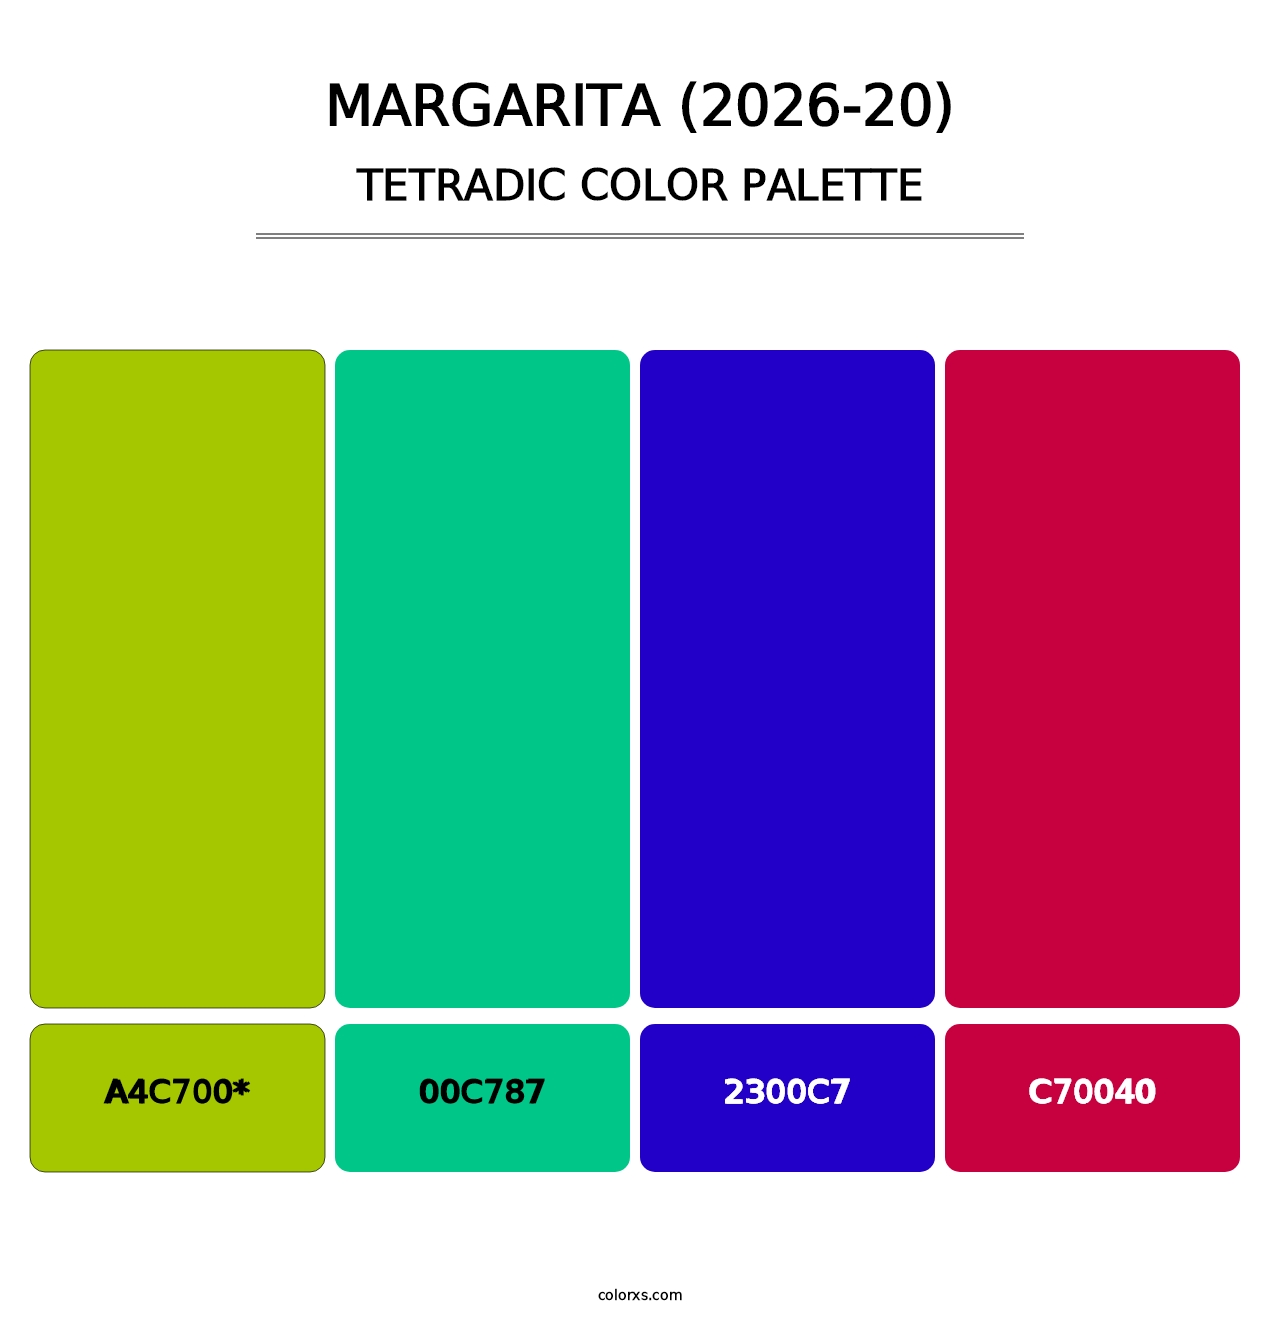 Margarita (2026-20) - Tetradic Color Palette